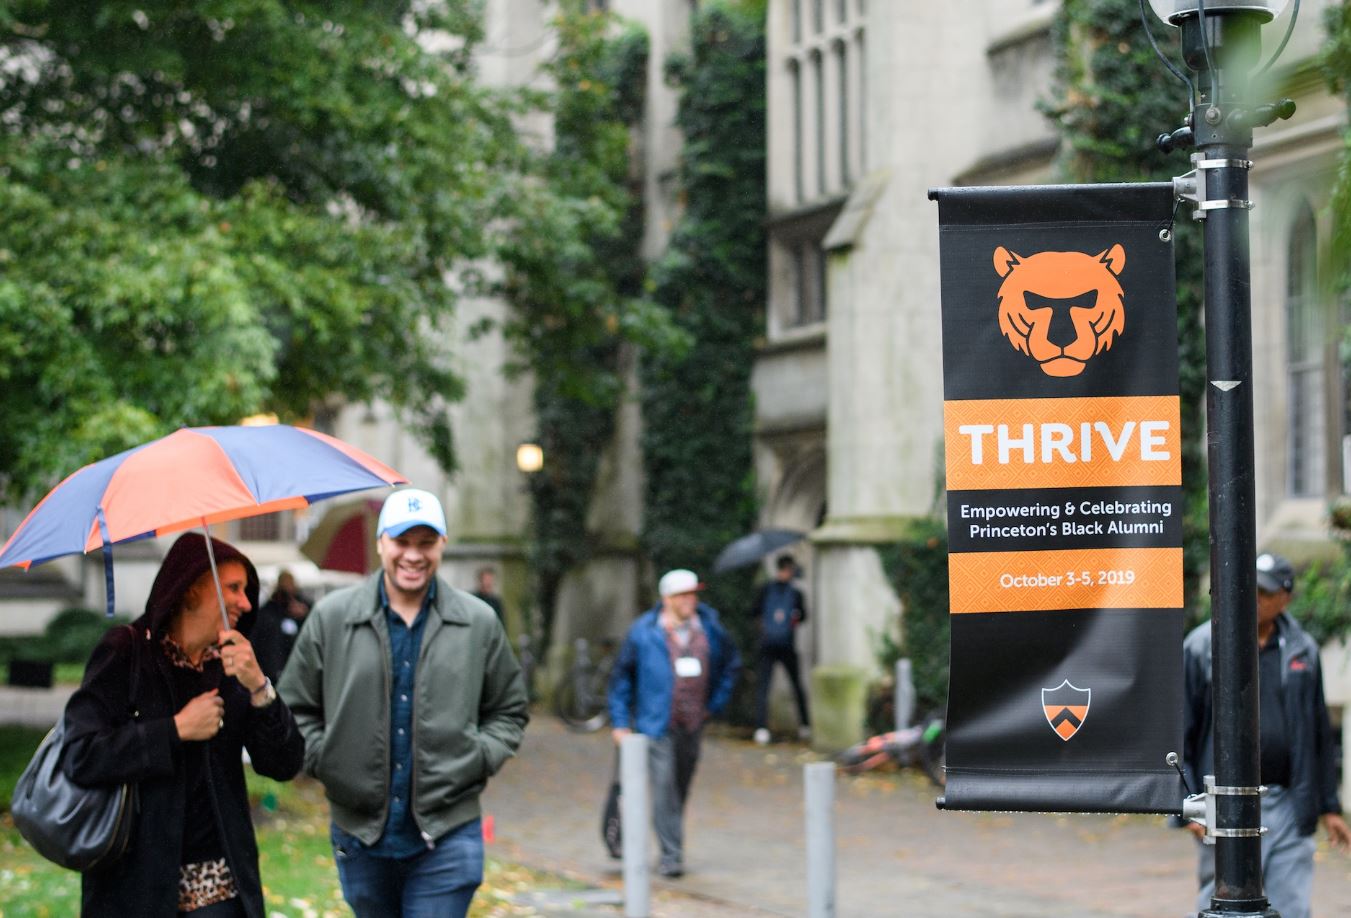 Thrive: Empowering and Celebrating Princeton's Black Alumni